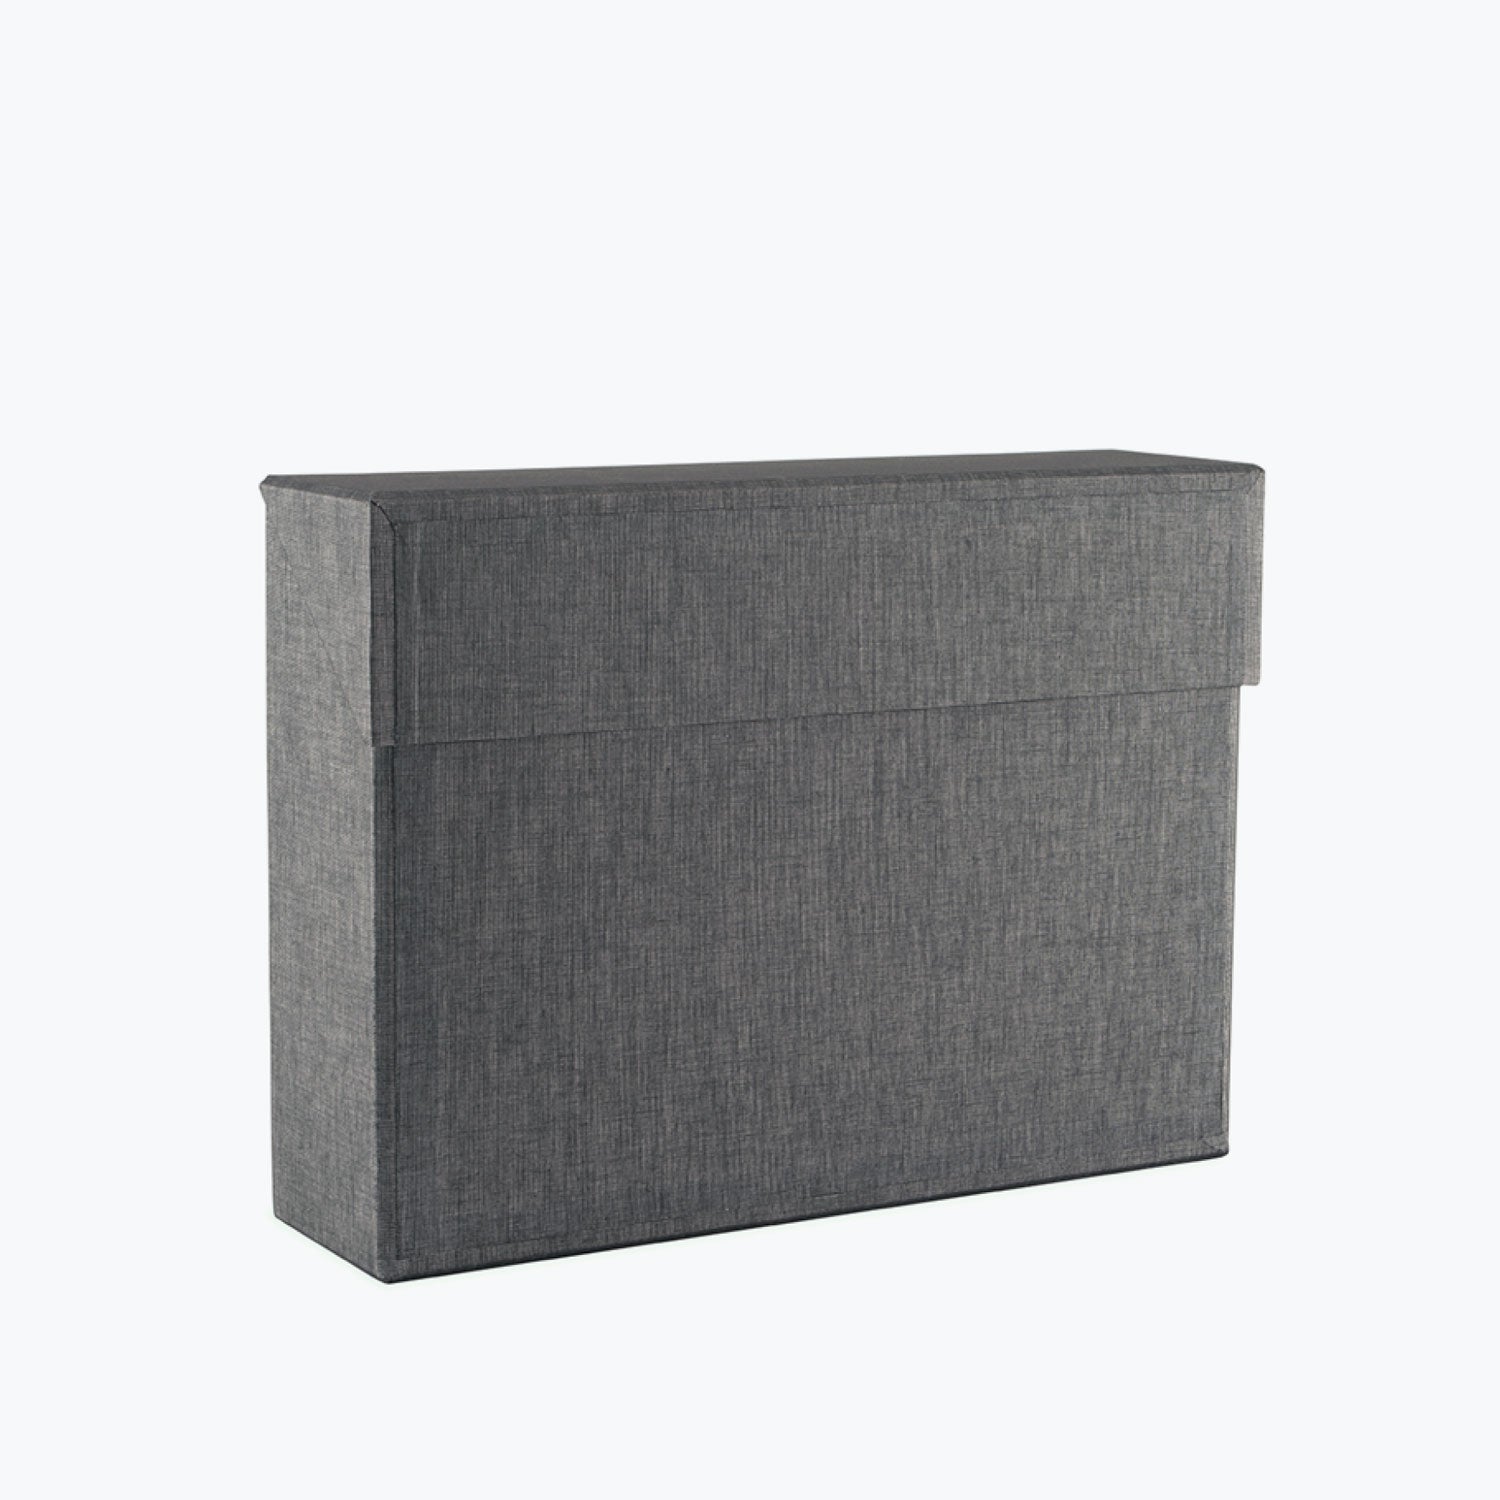 Bookbinders Design - Filing Box - A4 - Black/White